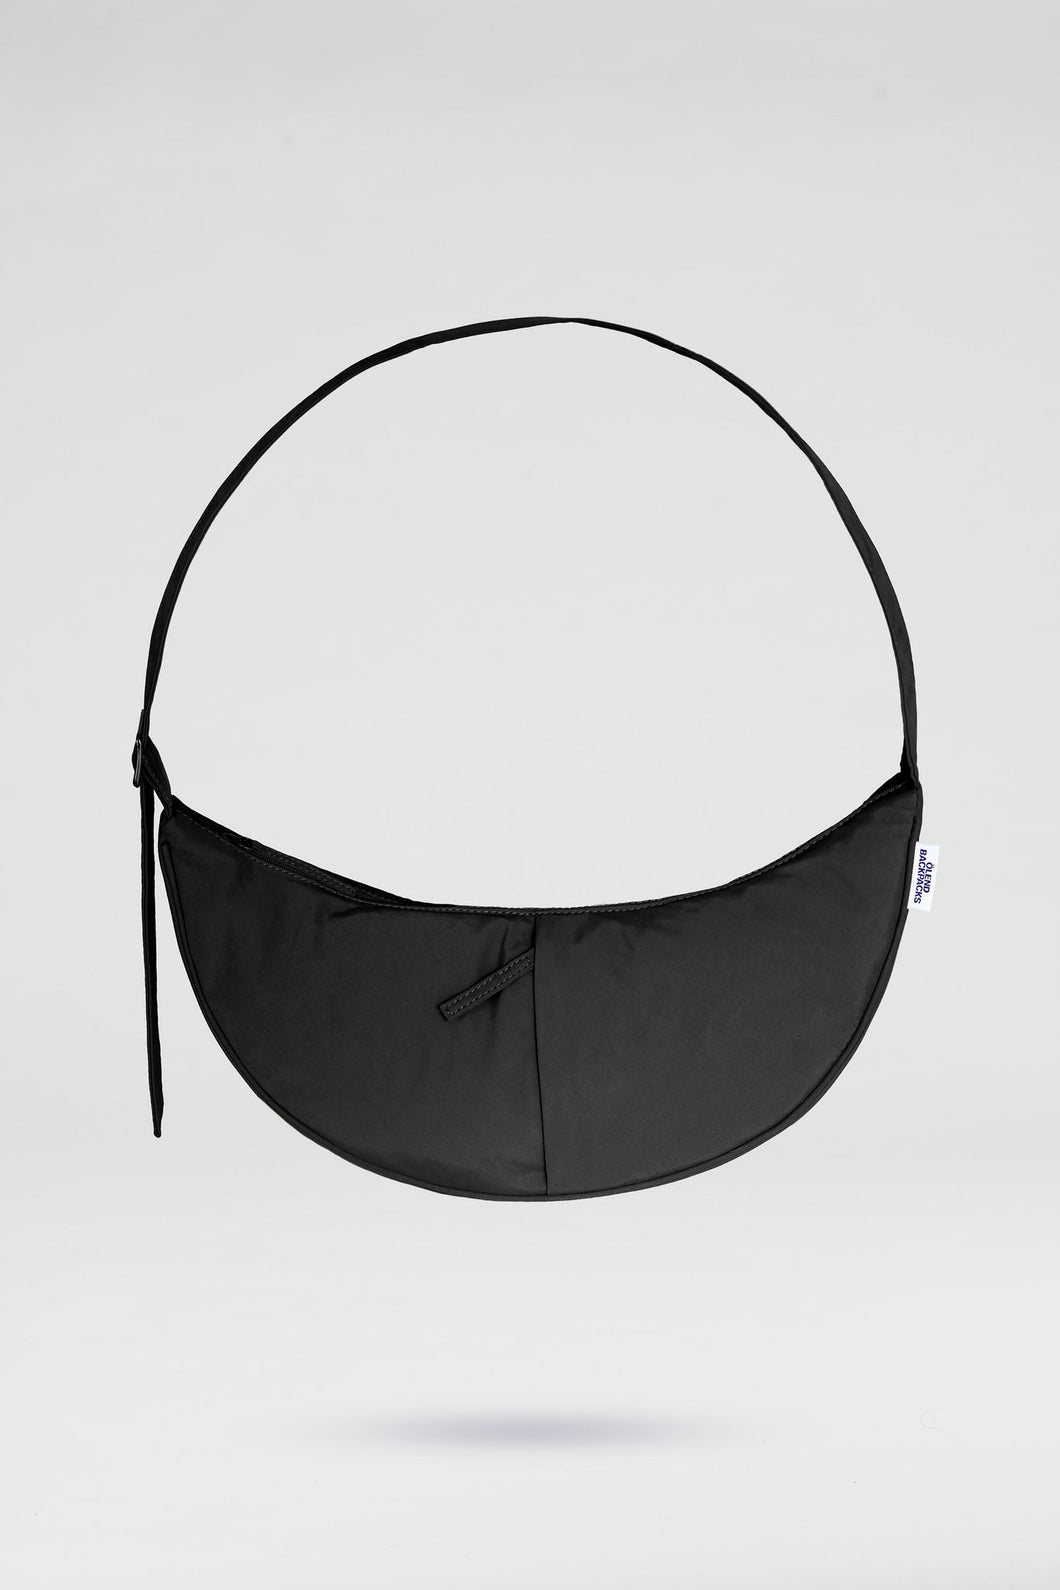 Black Moon Bag